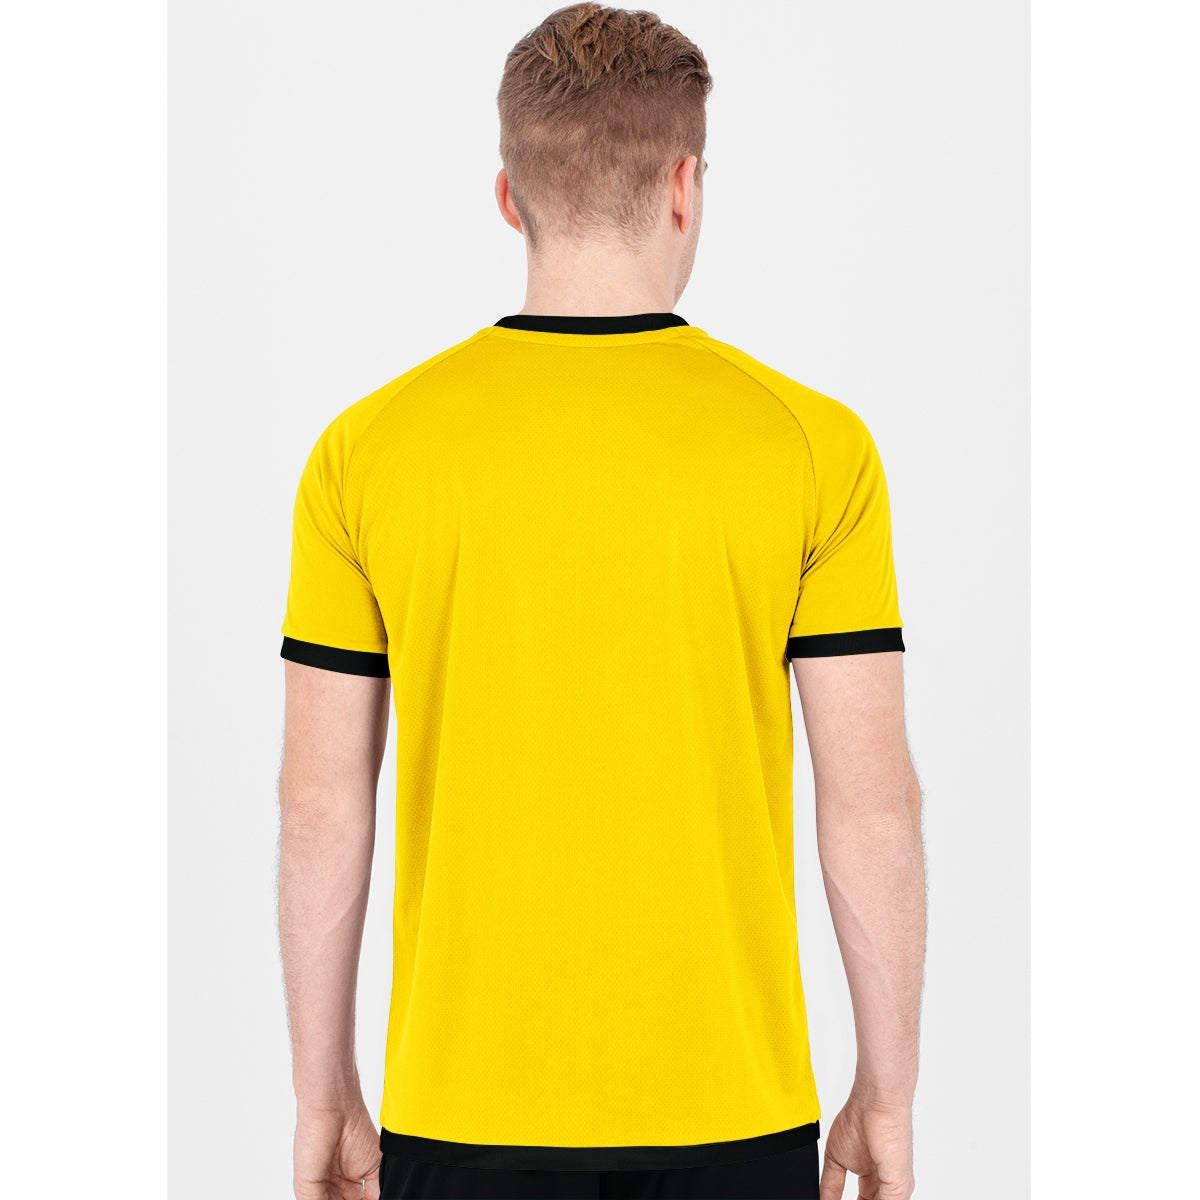 JAKO Futbolo Marškinėliai Boca (  M Dydis)